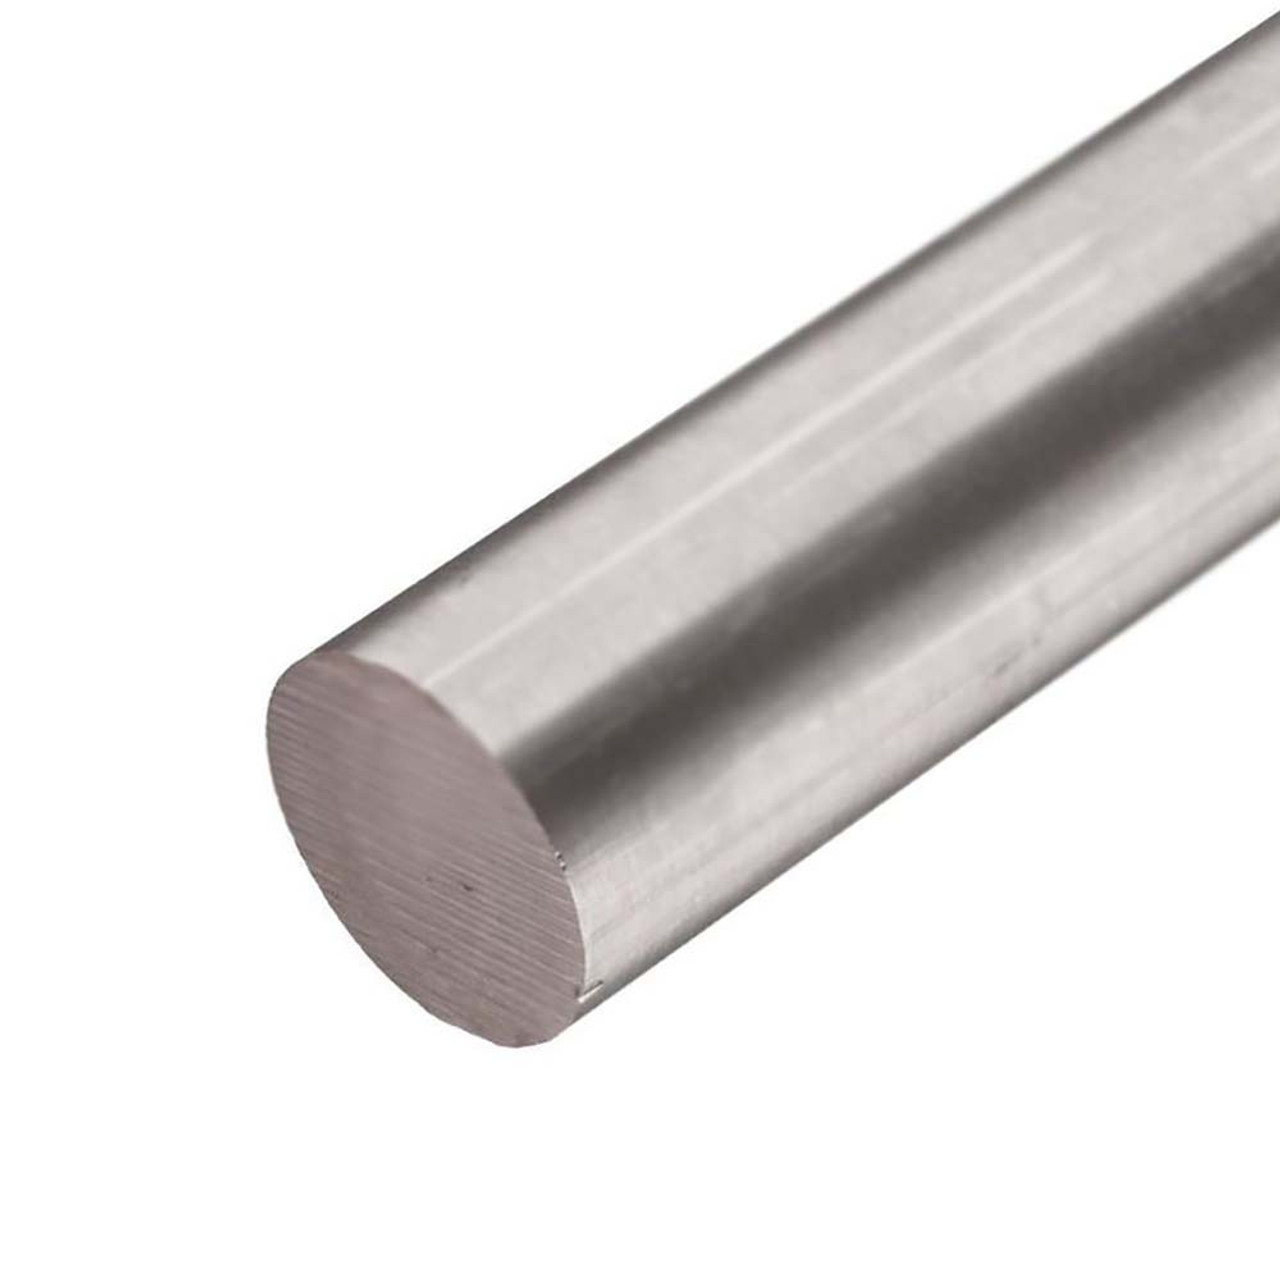 1.750 (1-3/4 inch) x 32 inches, 6061-T6511 Aluminum Round Rod